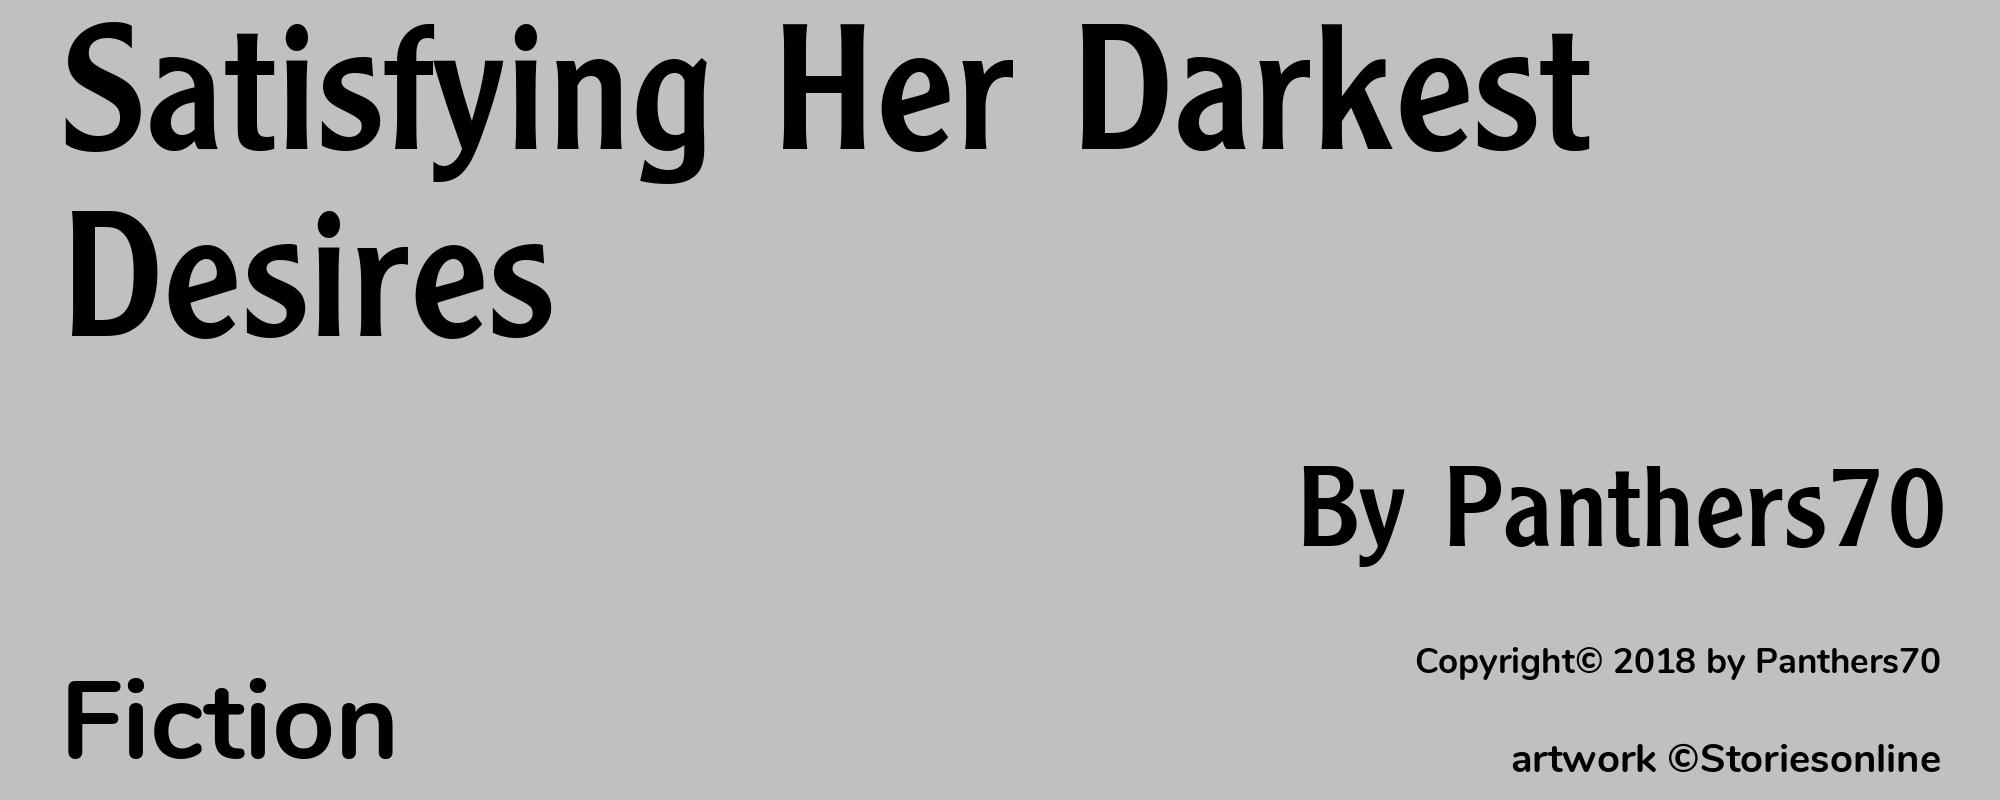 Satisfying Her Darkest Desires - Cover